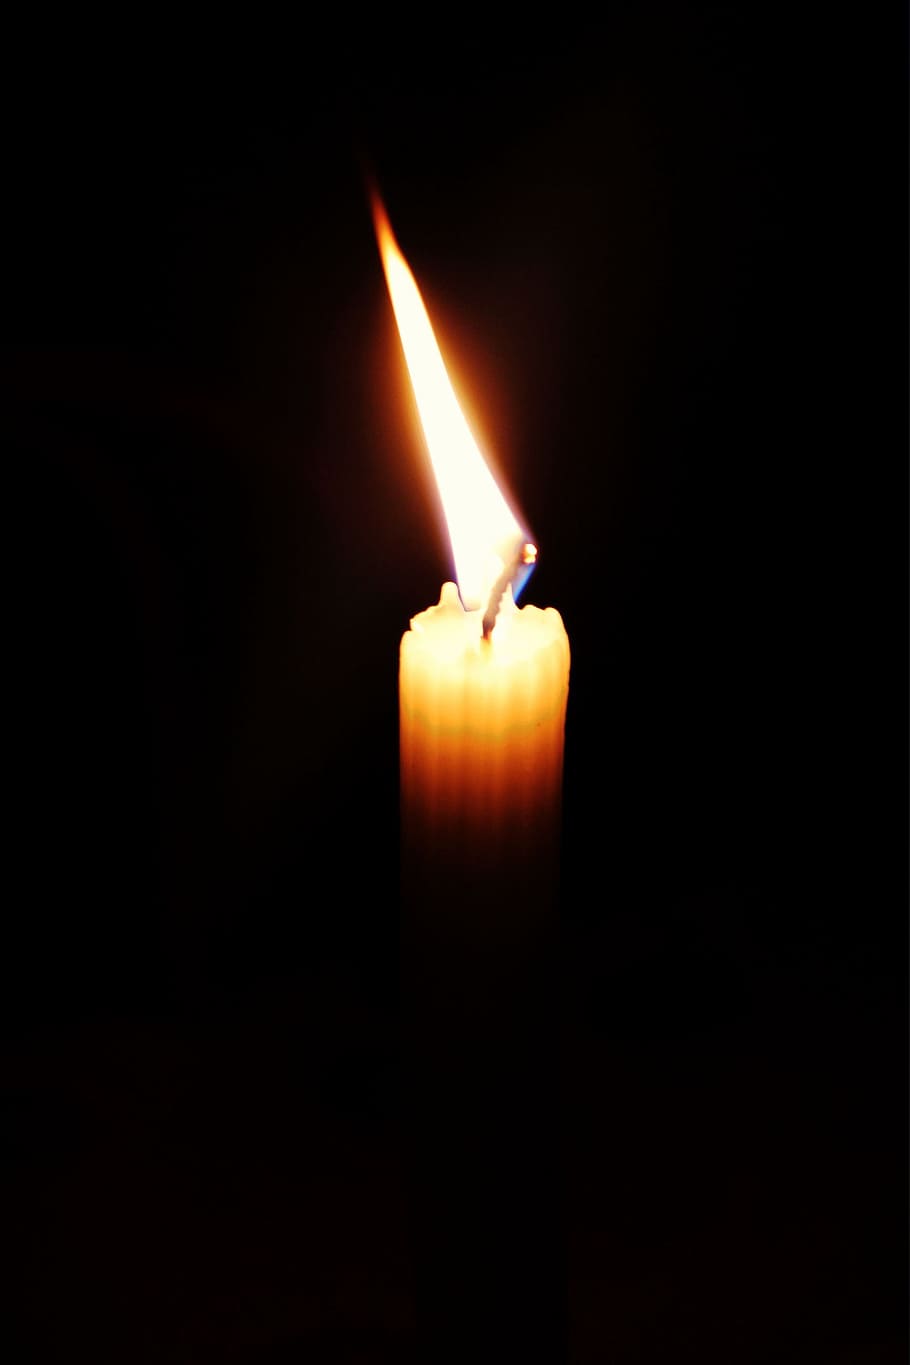 Candle, Vela, Fire, Fogo, Burn, celebrate, birthday, flame, hot, fire - Natural Phenomenon